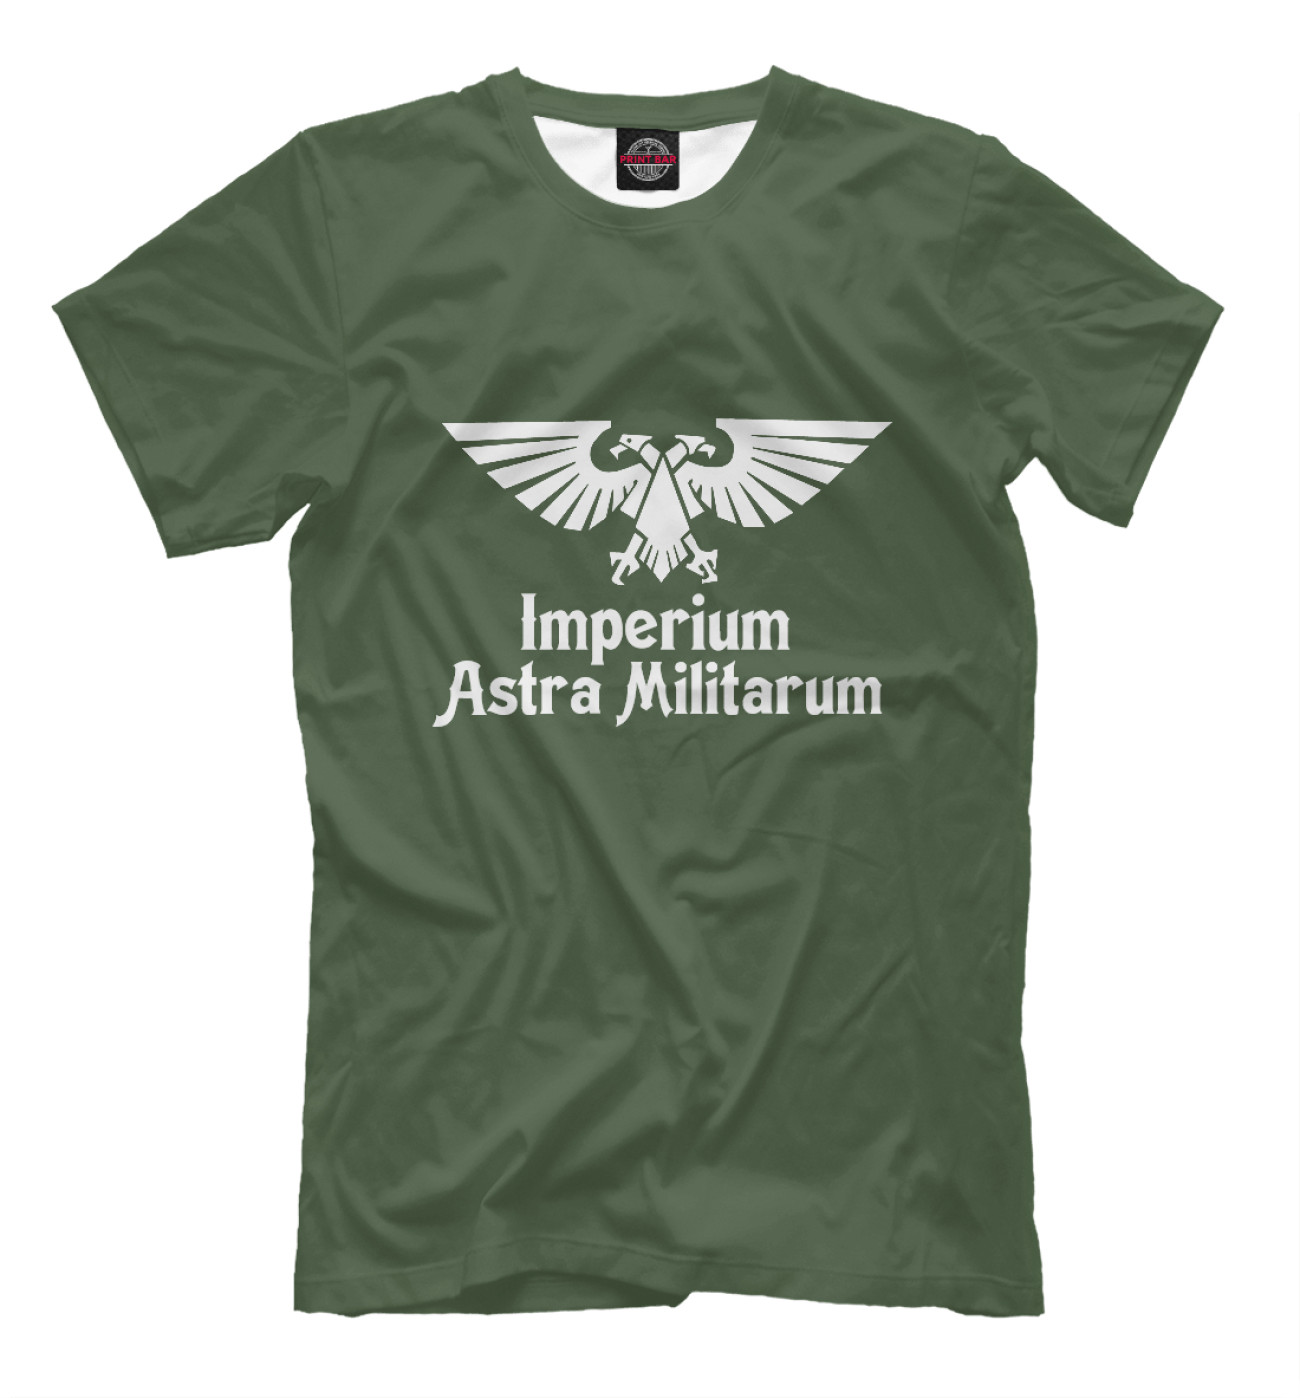 Мужская Футболка Imperium Astra Militarum, артикул: WHR-955925-fut-2